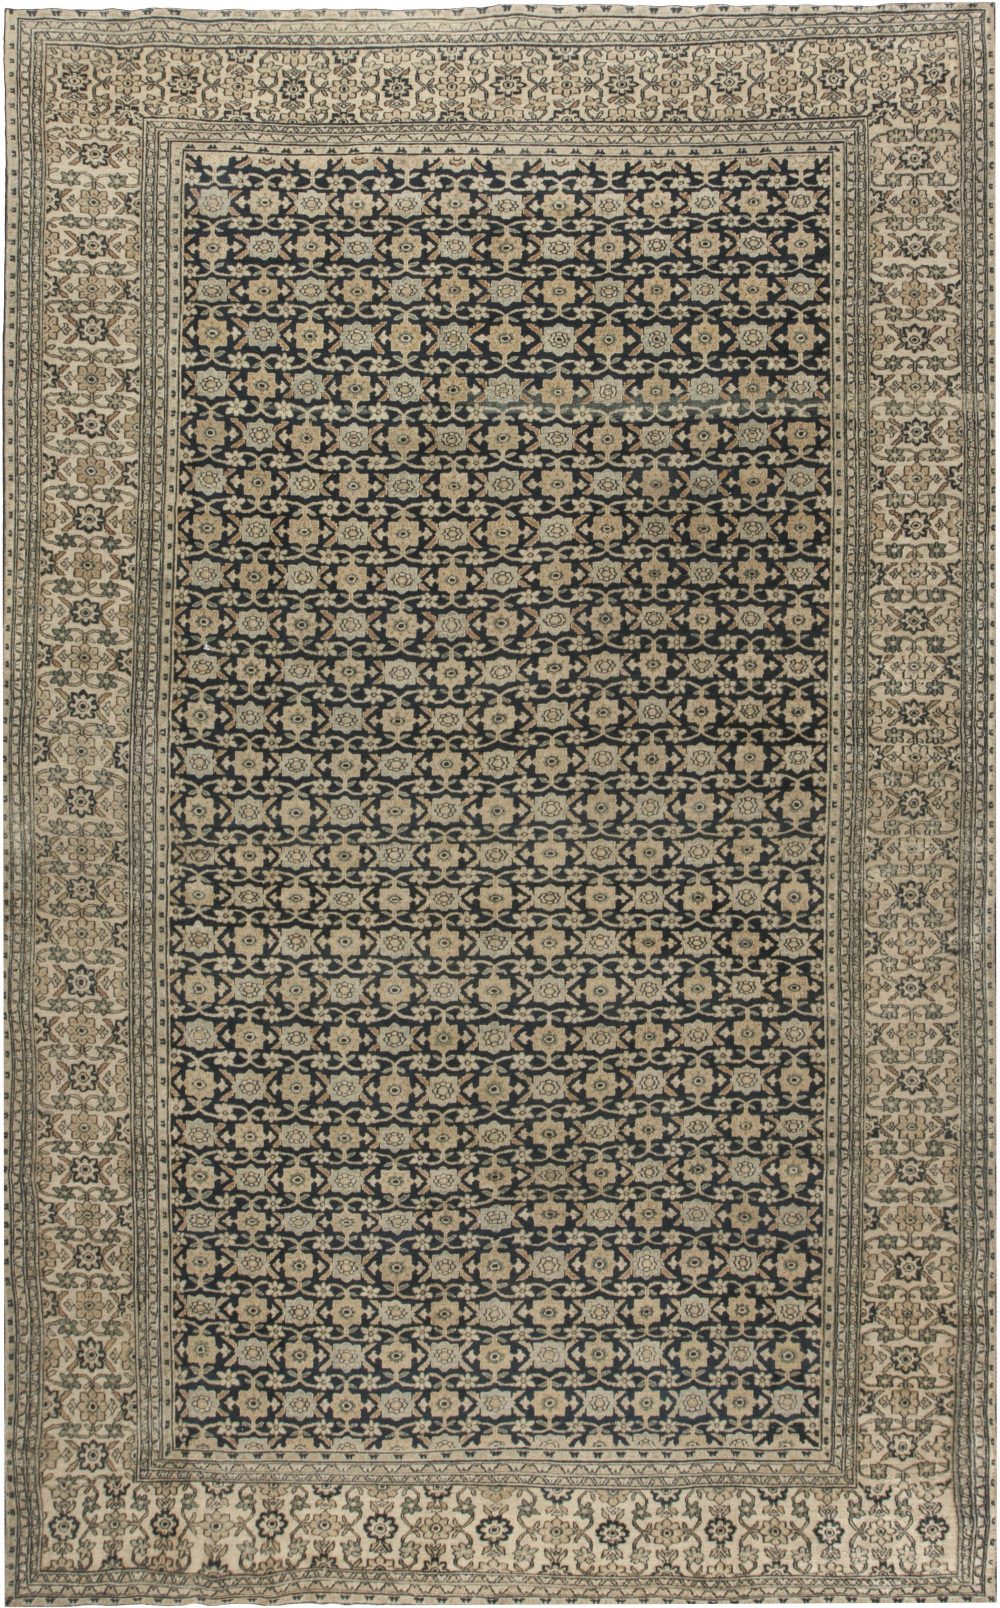 Antique Persian Meshad Botanic, Beige, Brown and Black Handwoven Wool Rug BB6501